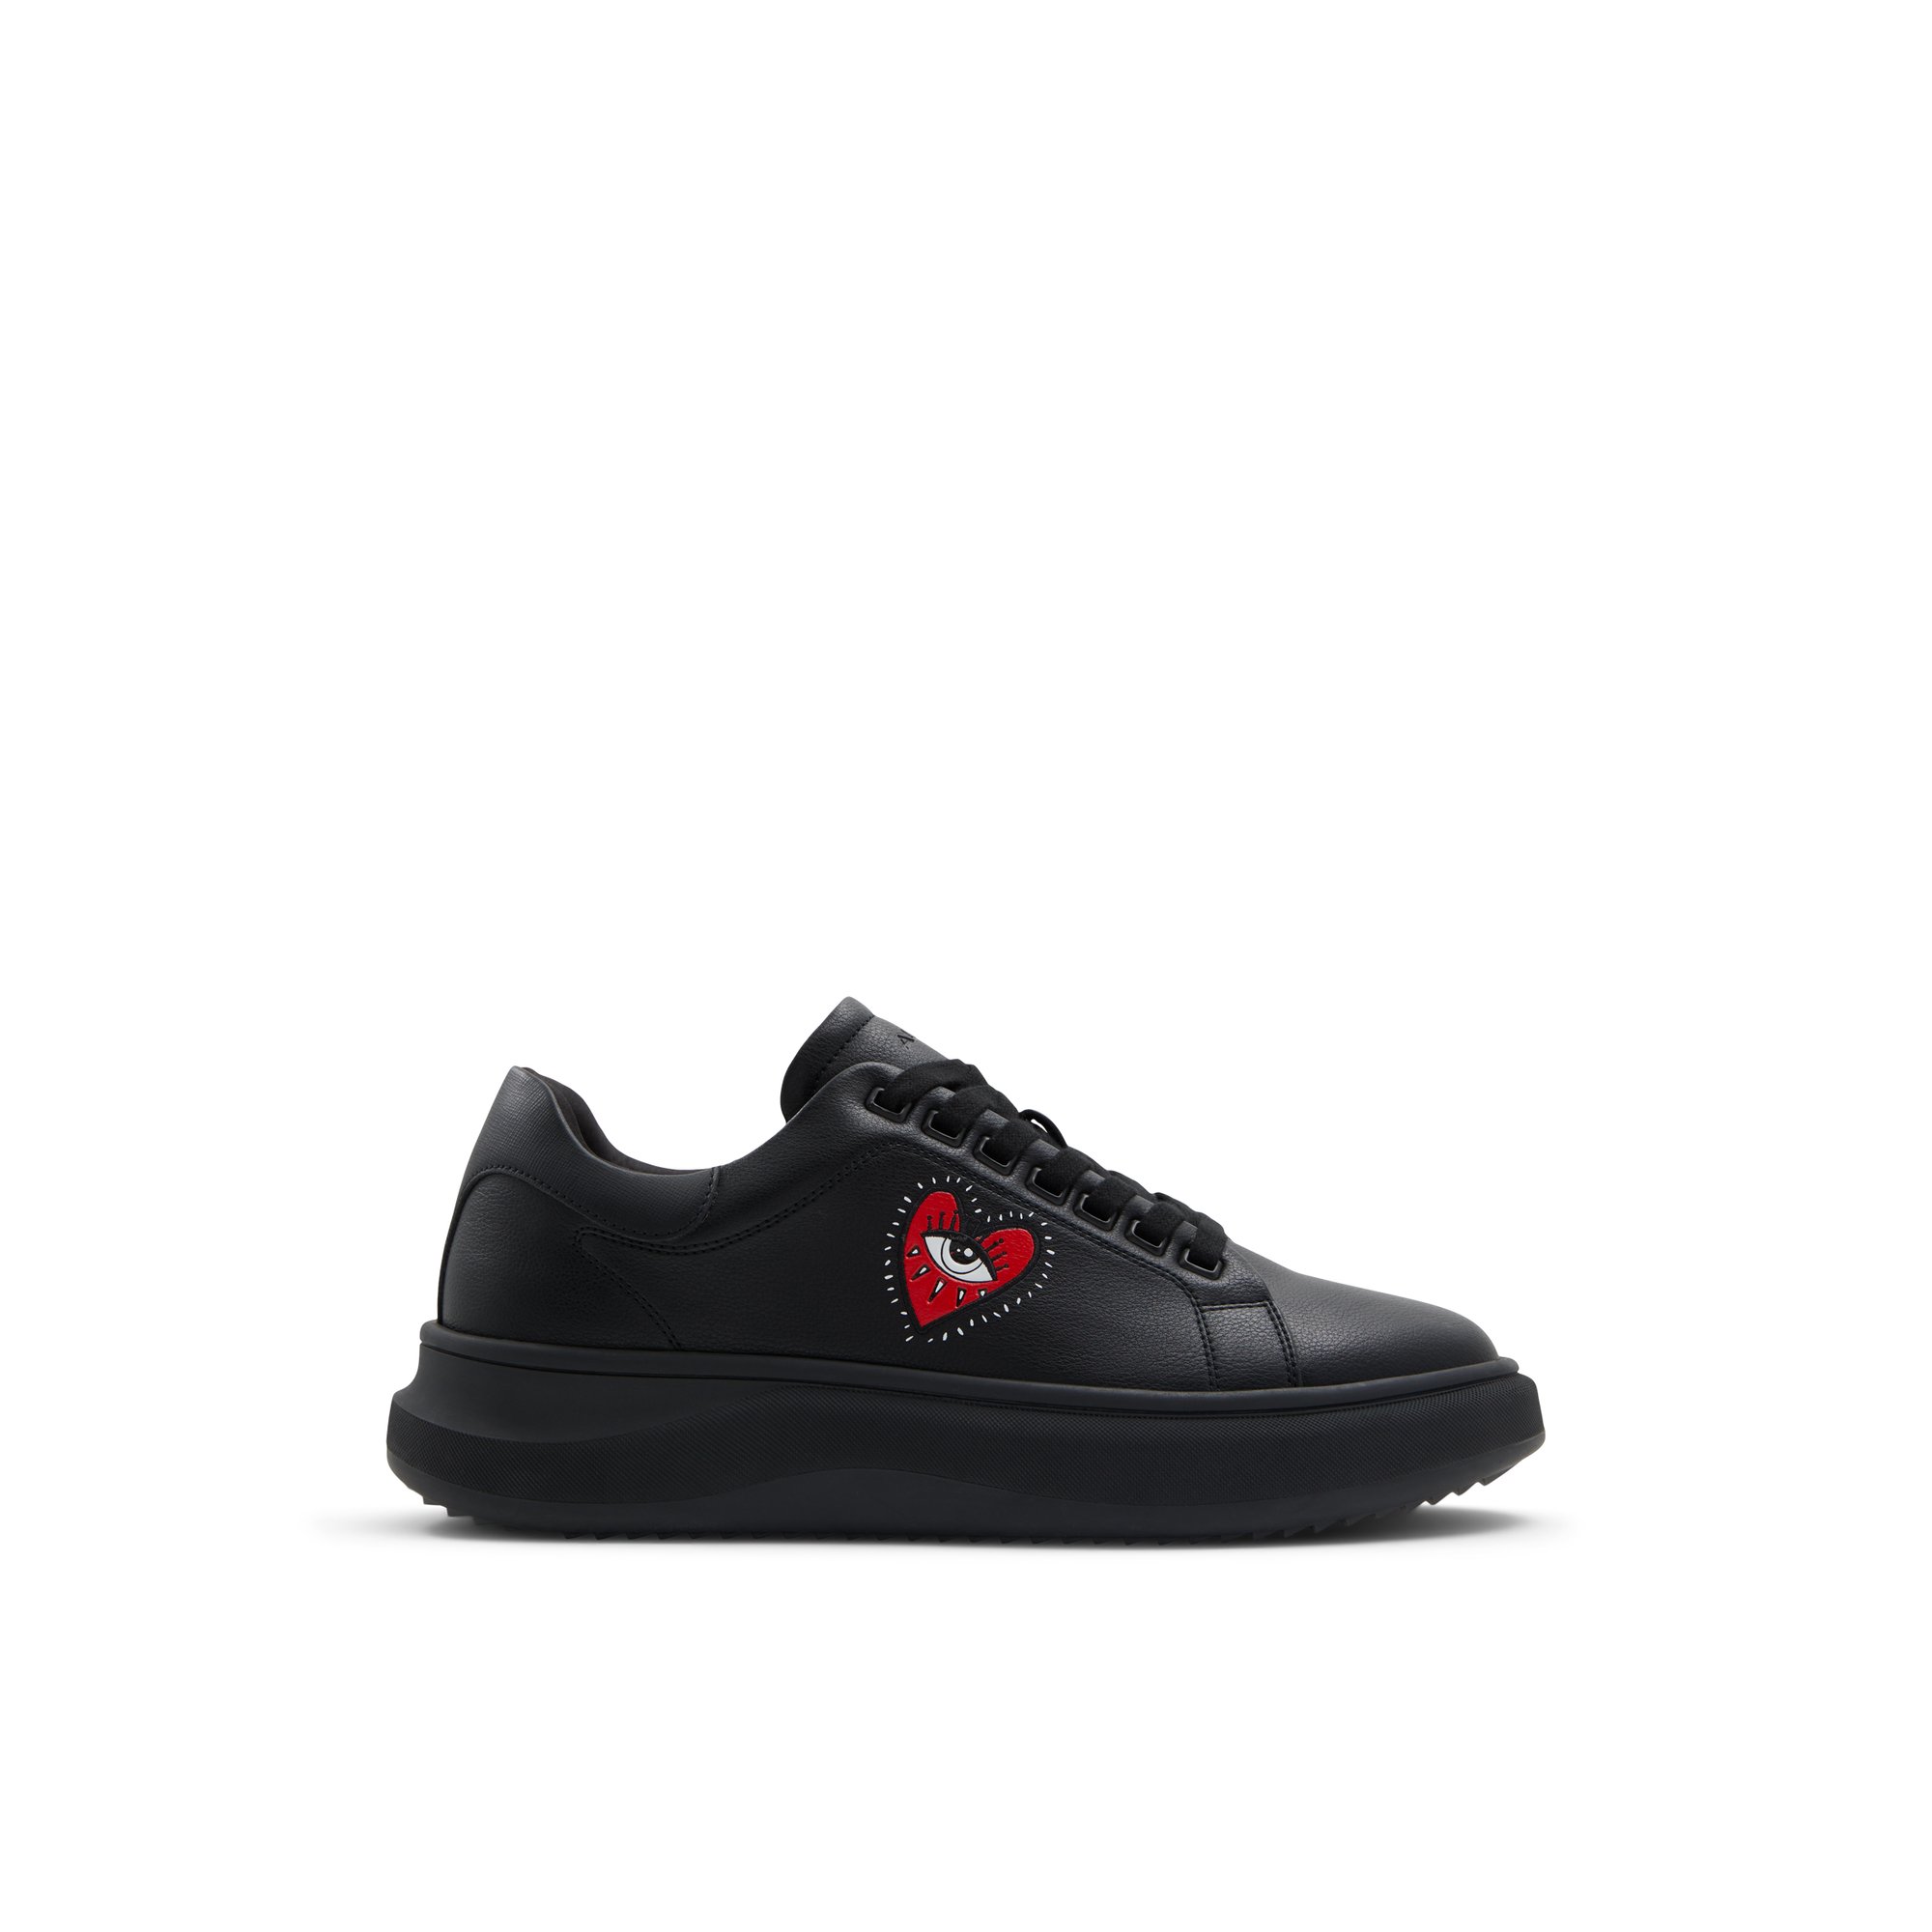 ALDO Lachlan - Men's Low Top Sneakers - Black